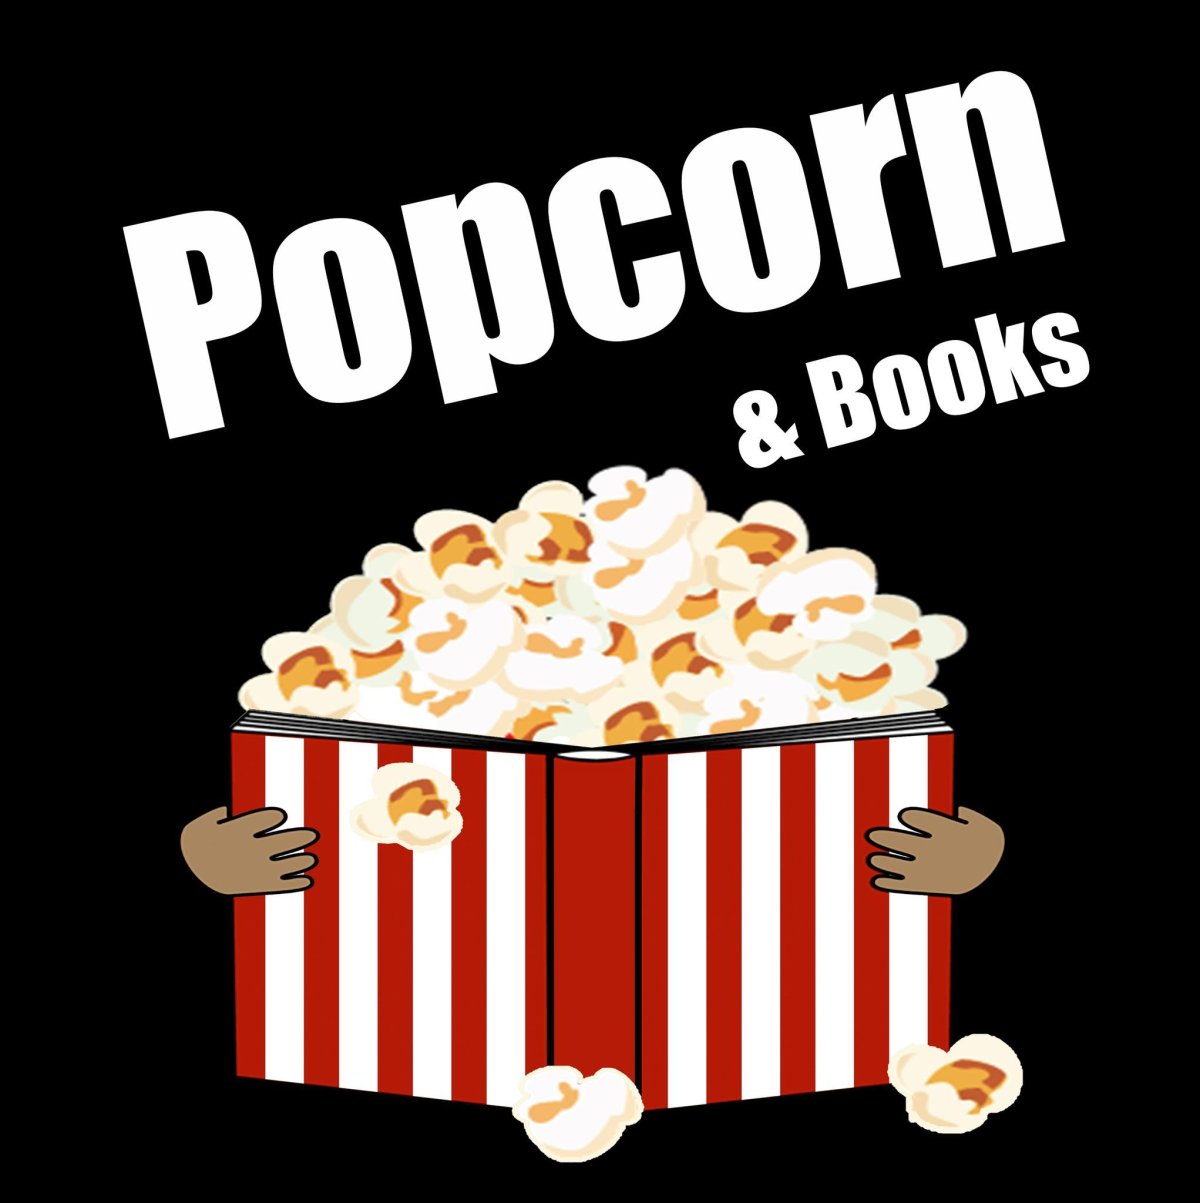 Купить книгу попкорн. Книги попкорн. Popcorn books логотип. Попкорн бук обложки. Popcorn books мерч.